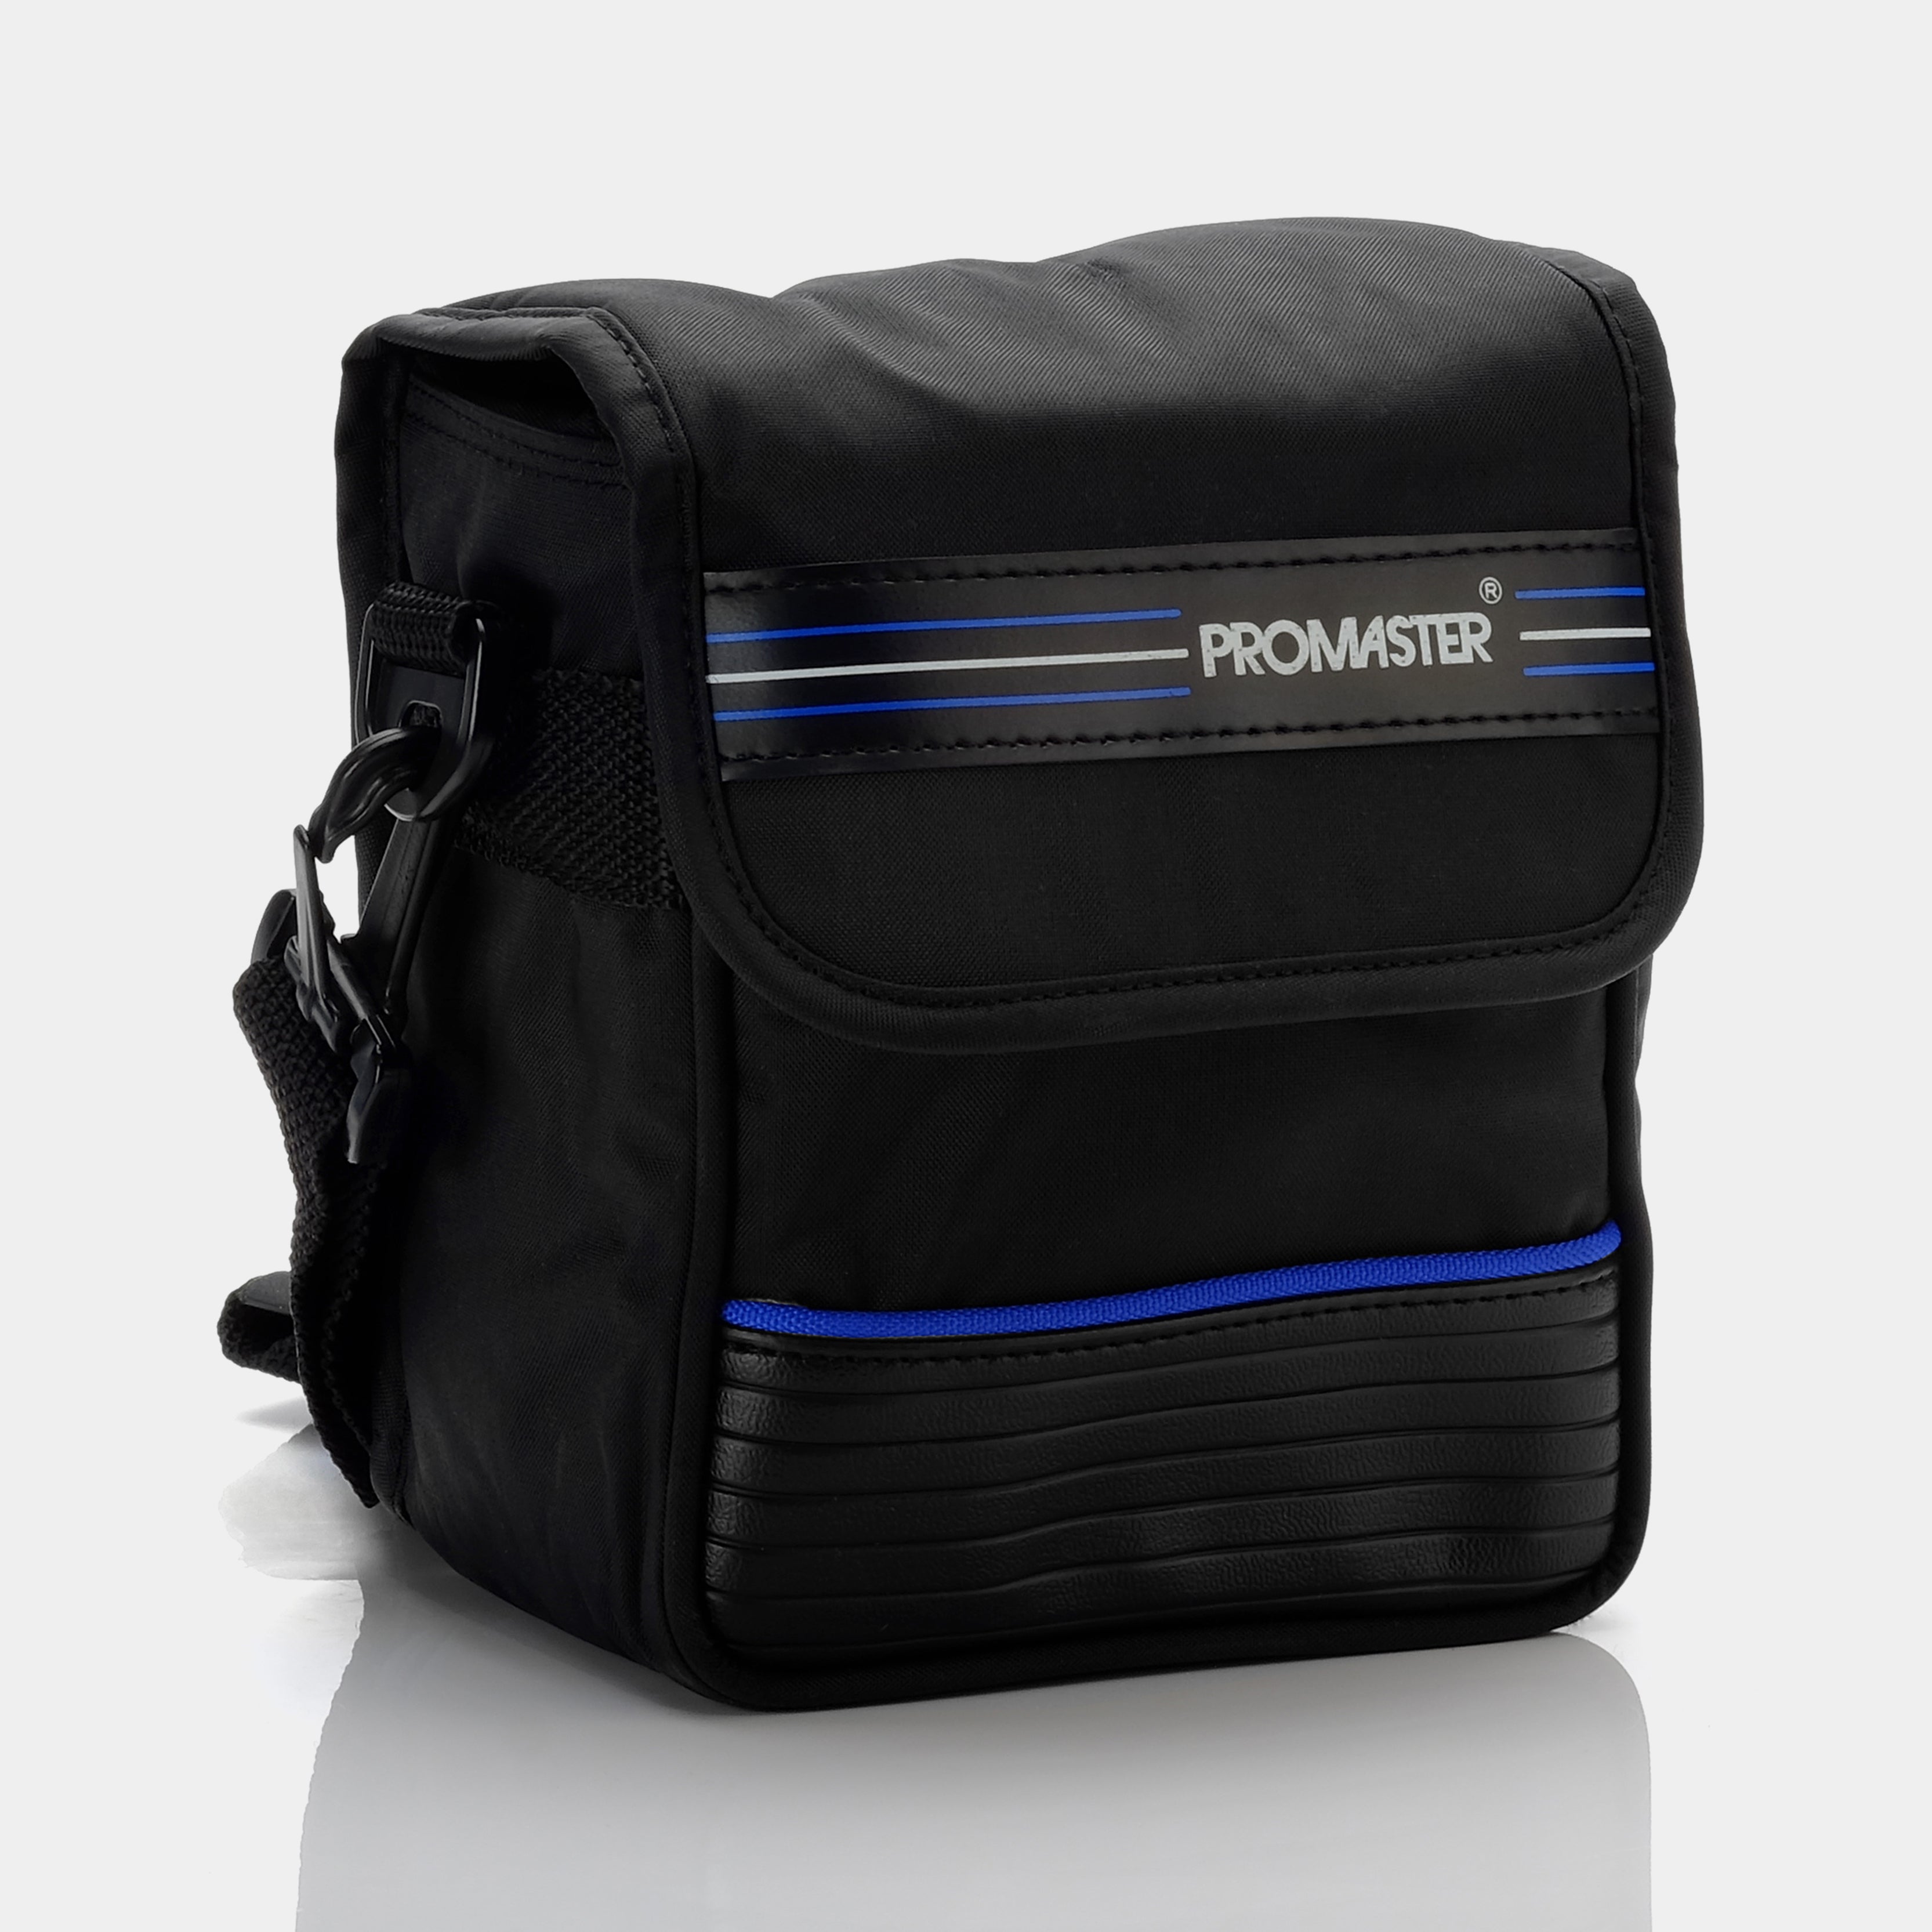 Promaster Instant Camera Bag